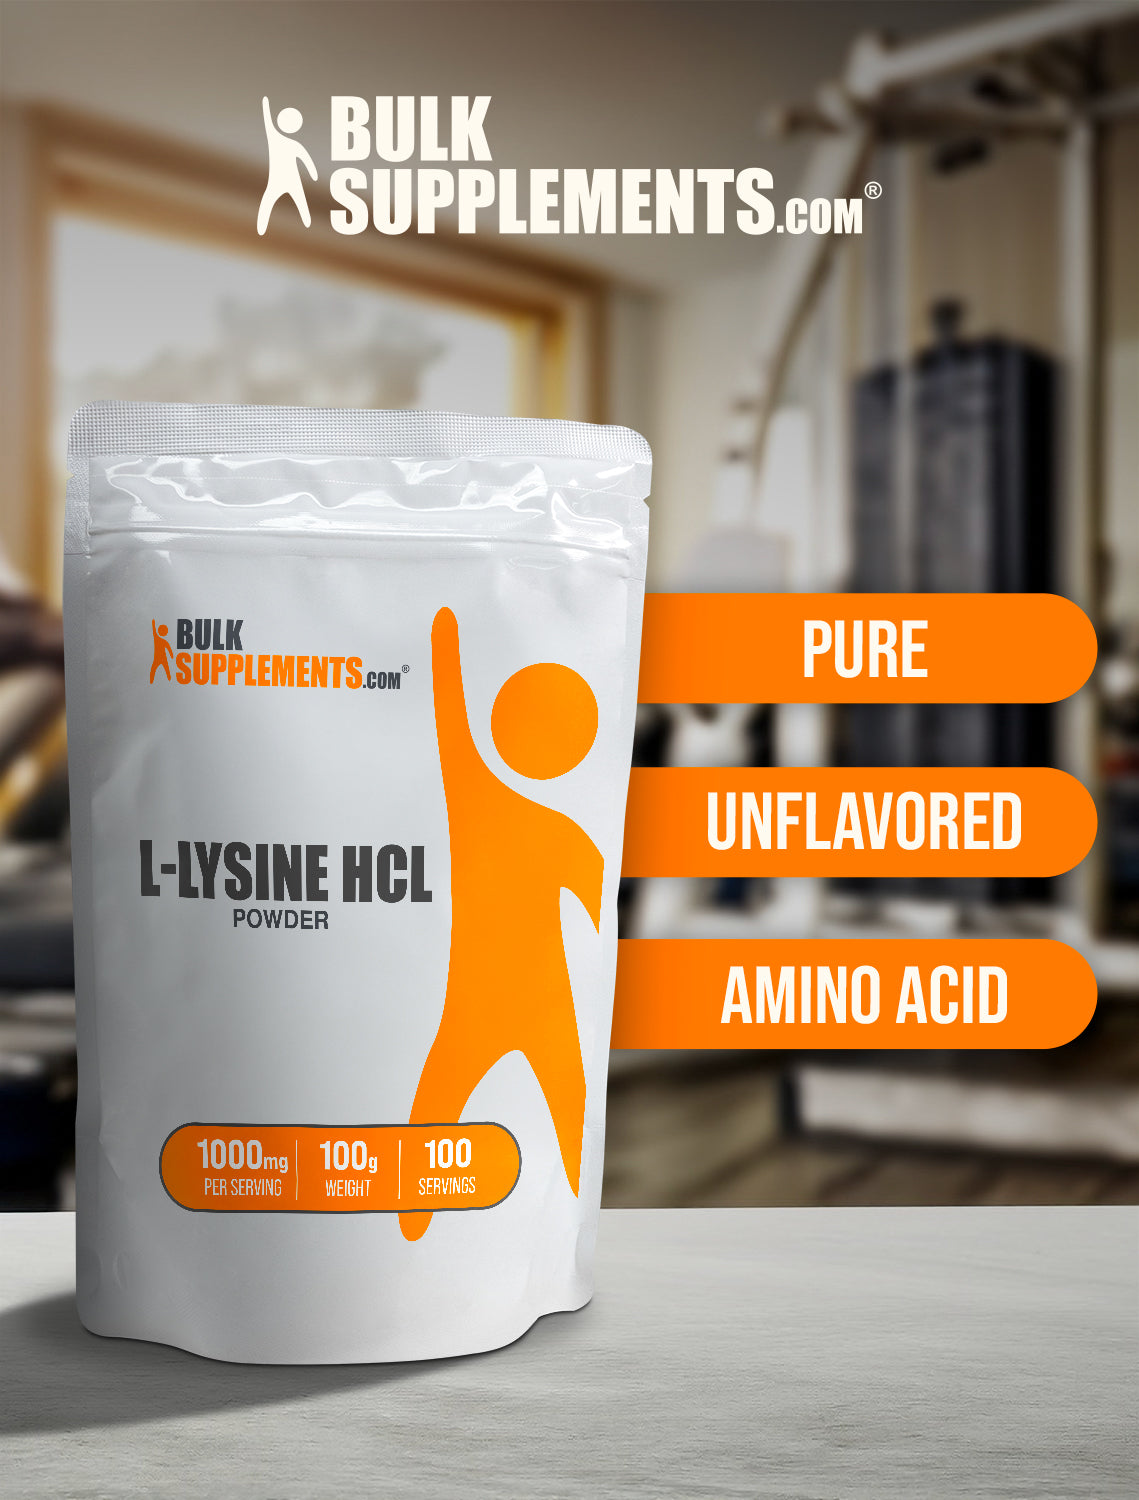 L-Lysine HCl powder 100g keywords image